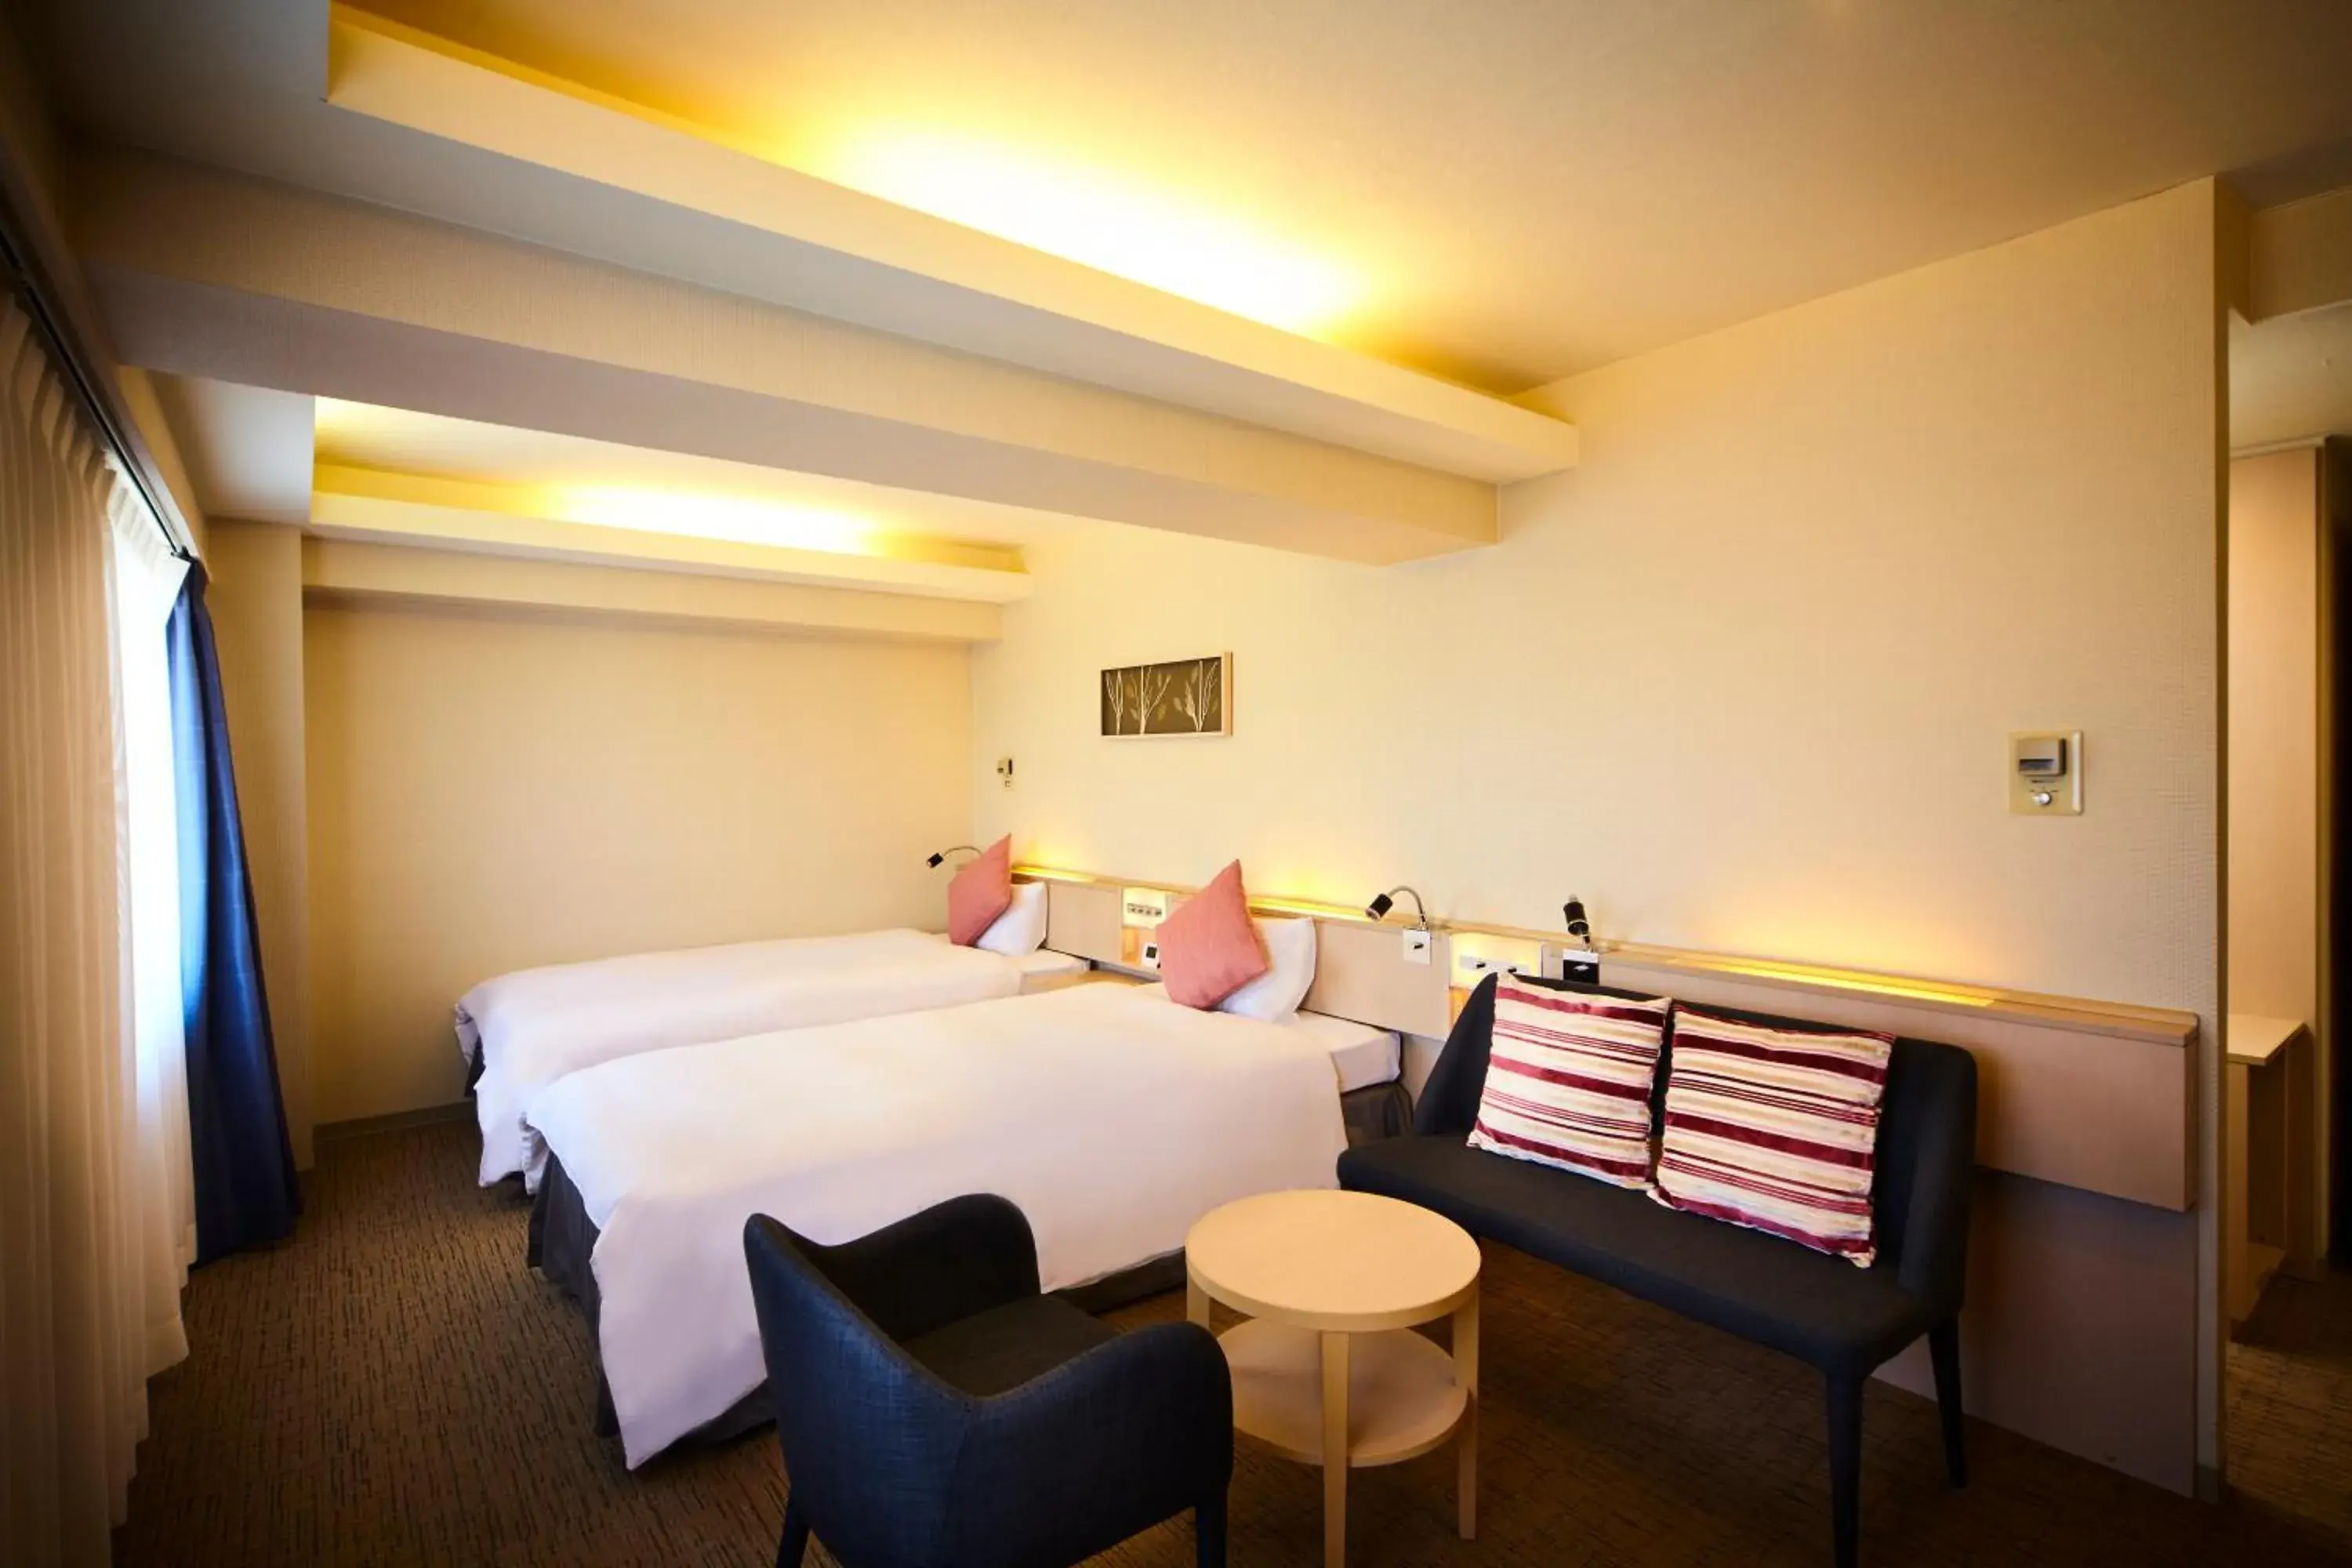 Bed, Room Photo in Tmark City Hotel Sapporo